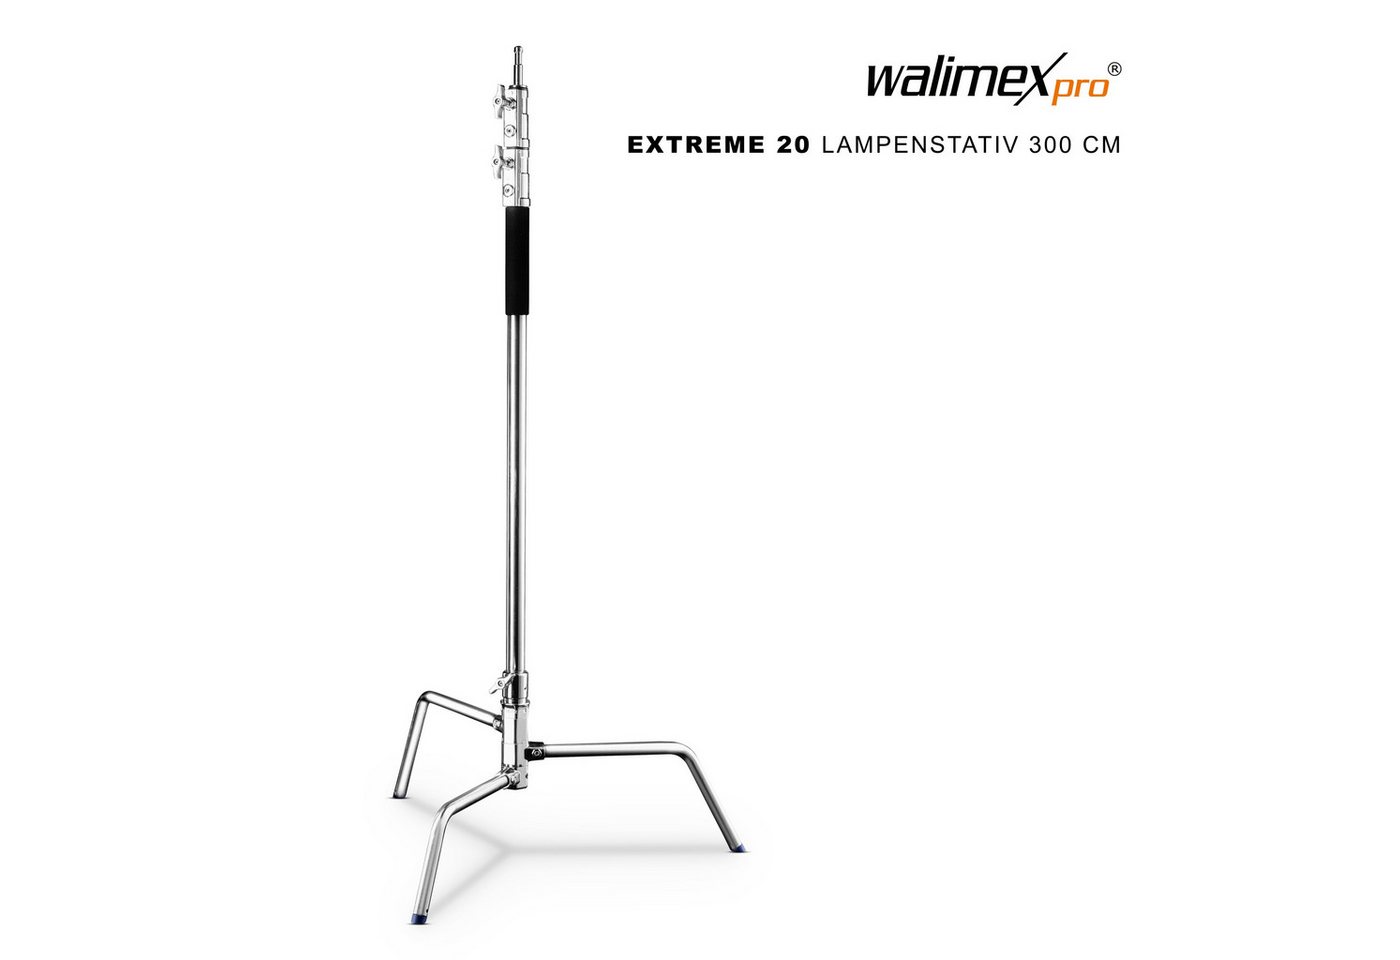 Walimex Pro Extreme 20 Lampenstativ 300 cm Lampenstativ von Walimex Pro